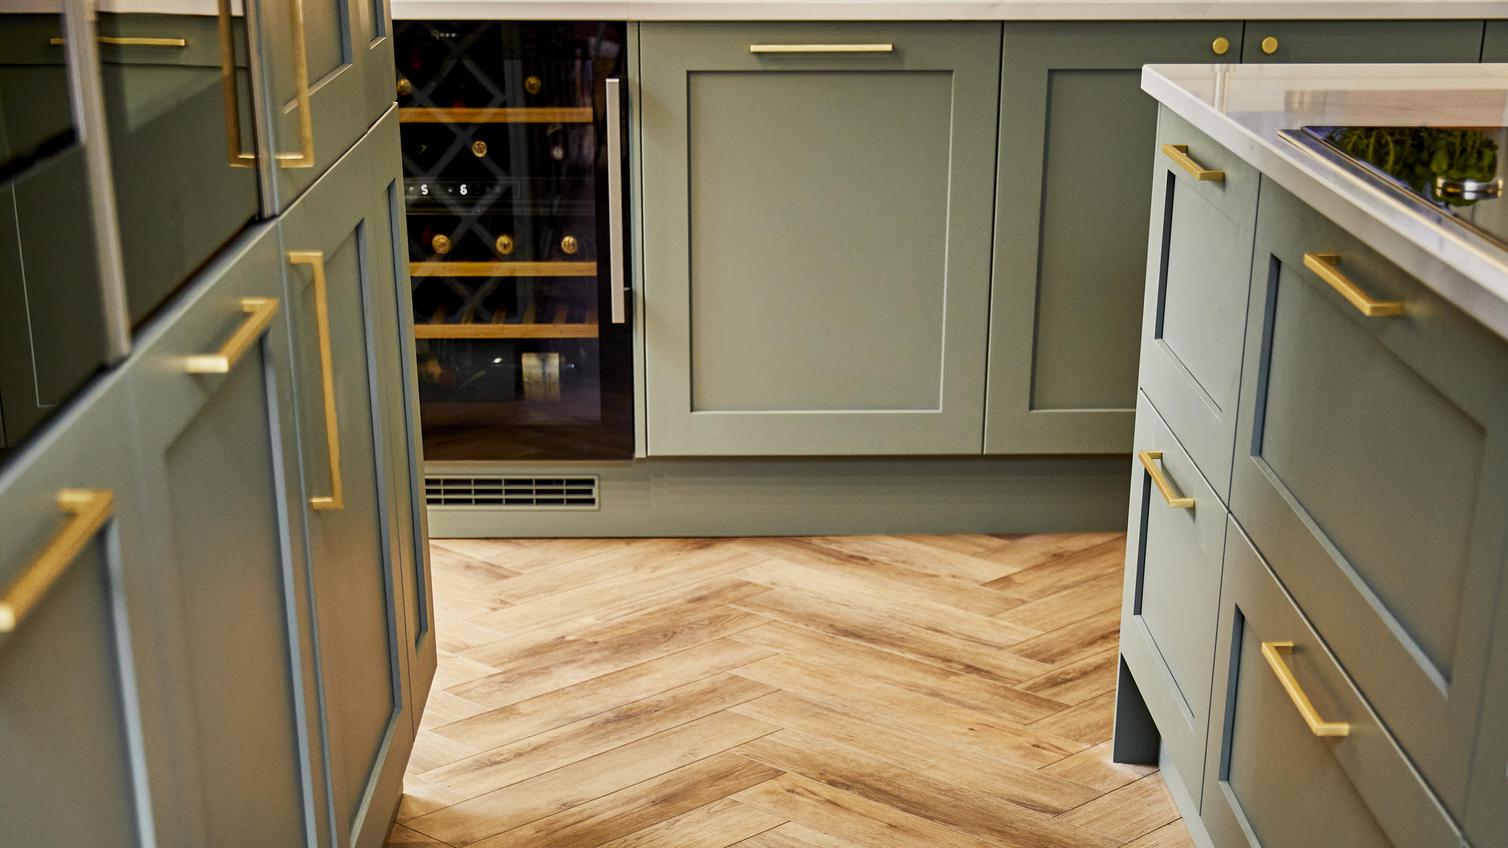 Sage green shaker kitchen design with antique wood chevron flooring, brass bar handles, and a wine fridge.